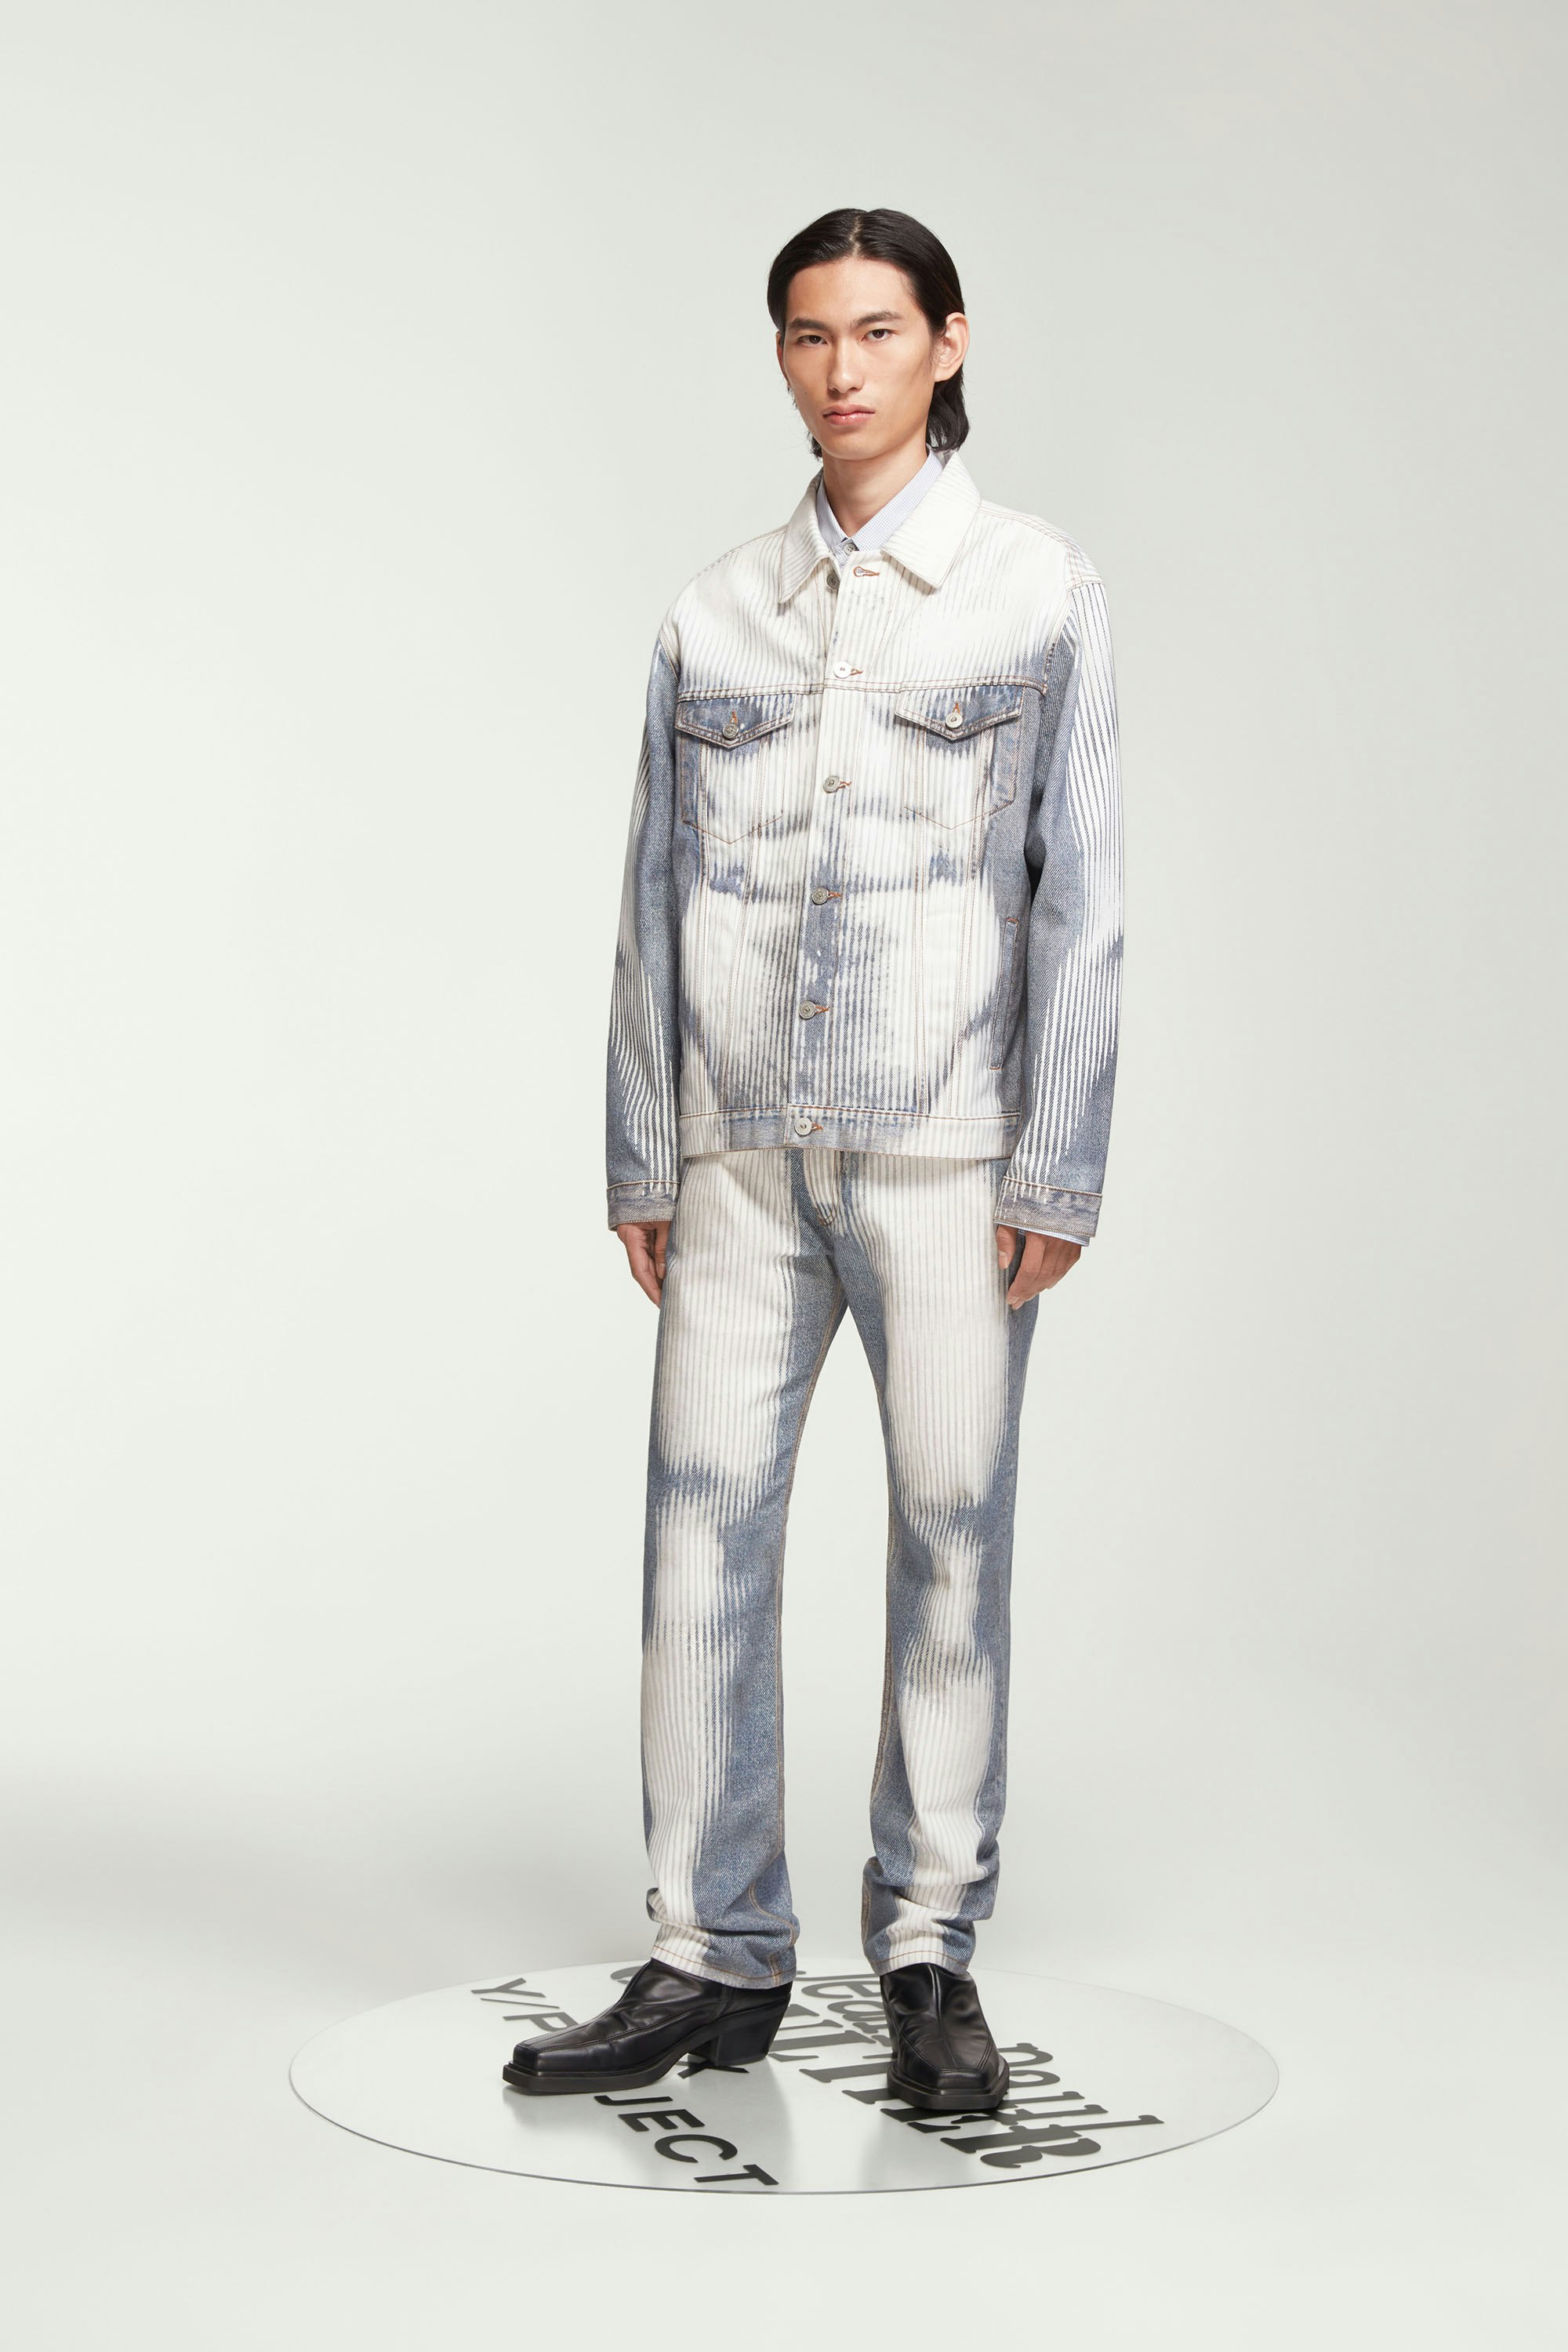 The Blue & White Body Morph Denim Jacket by Jean Paul Gaultier x Y/Project